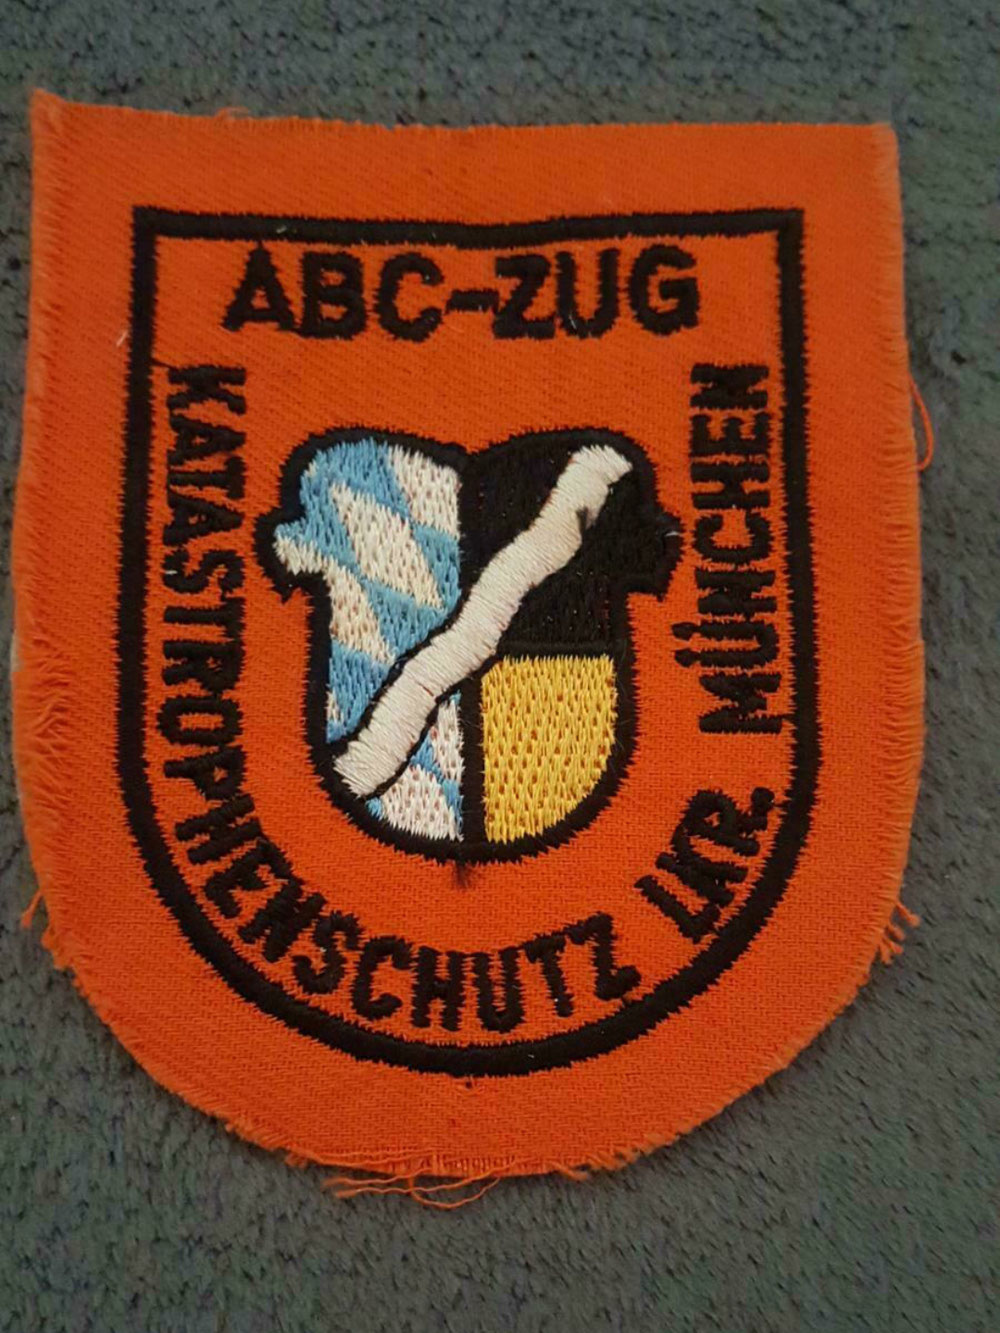 ABC Zug Ldk. München